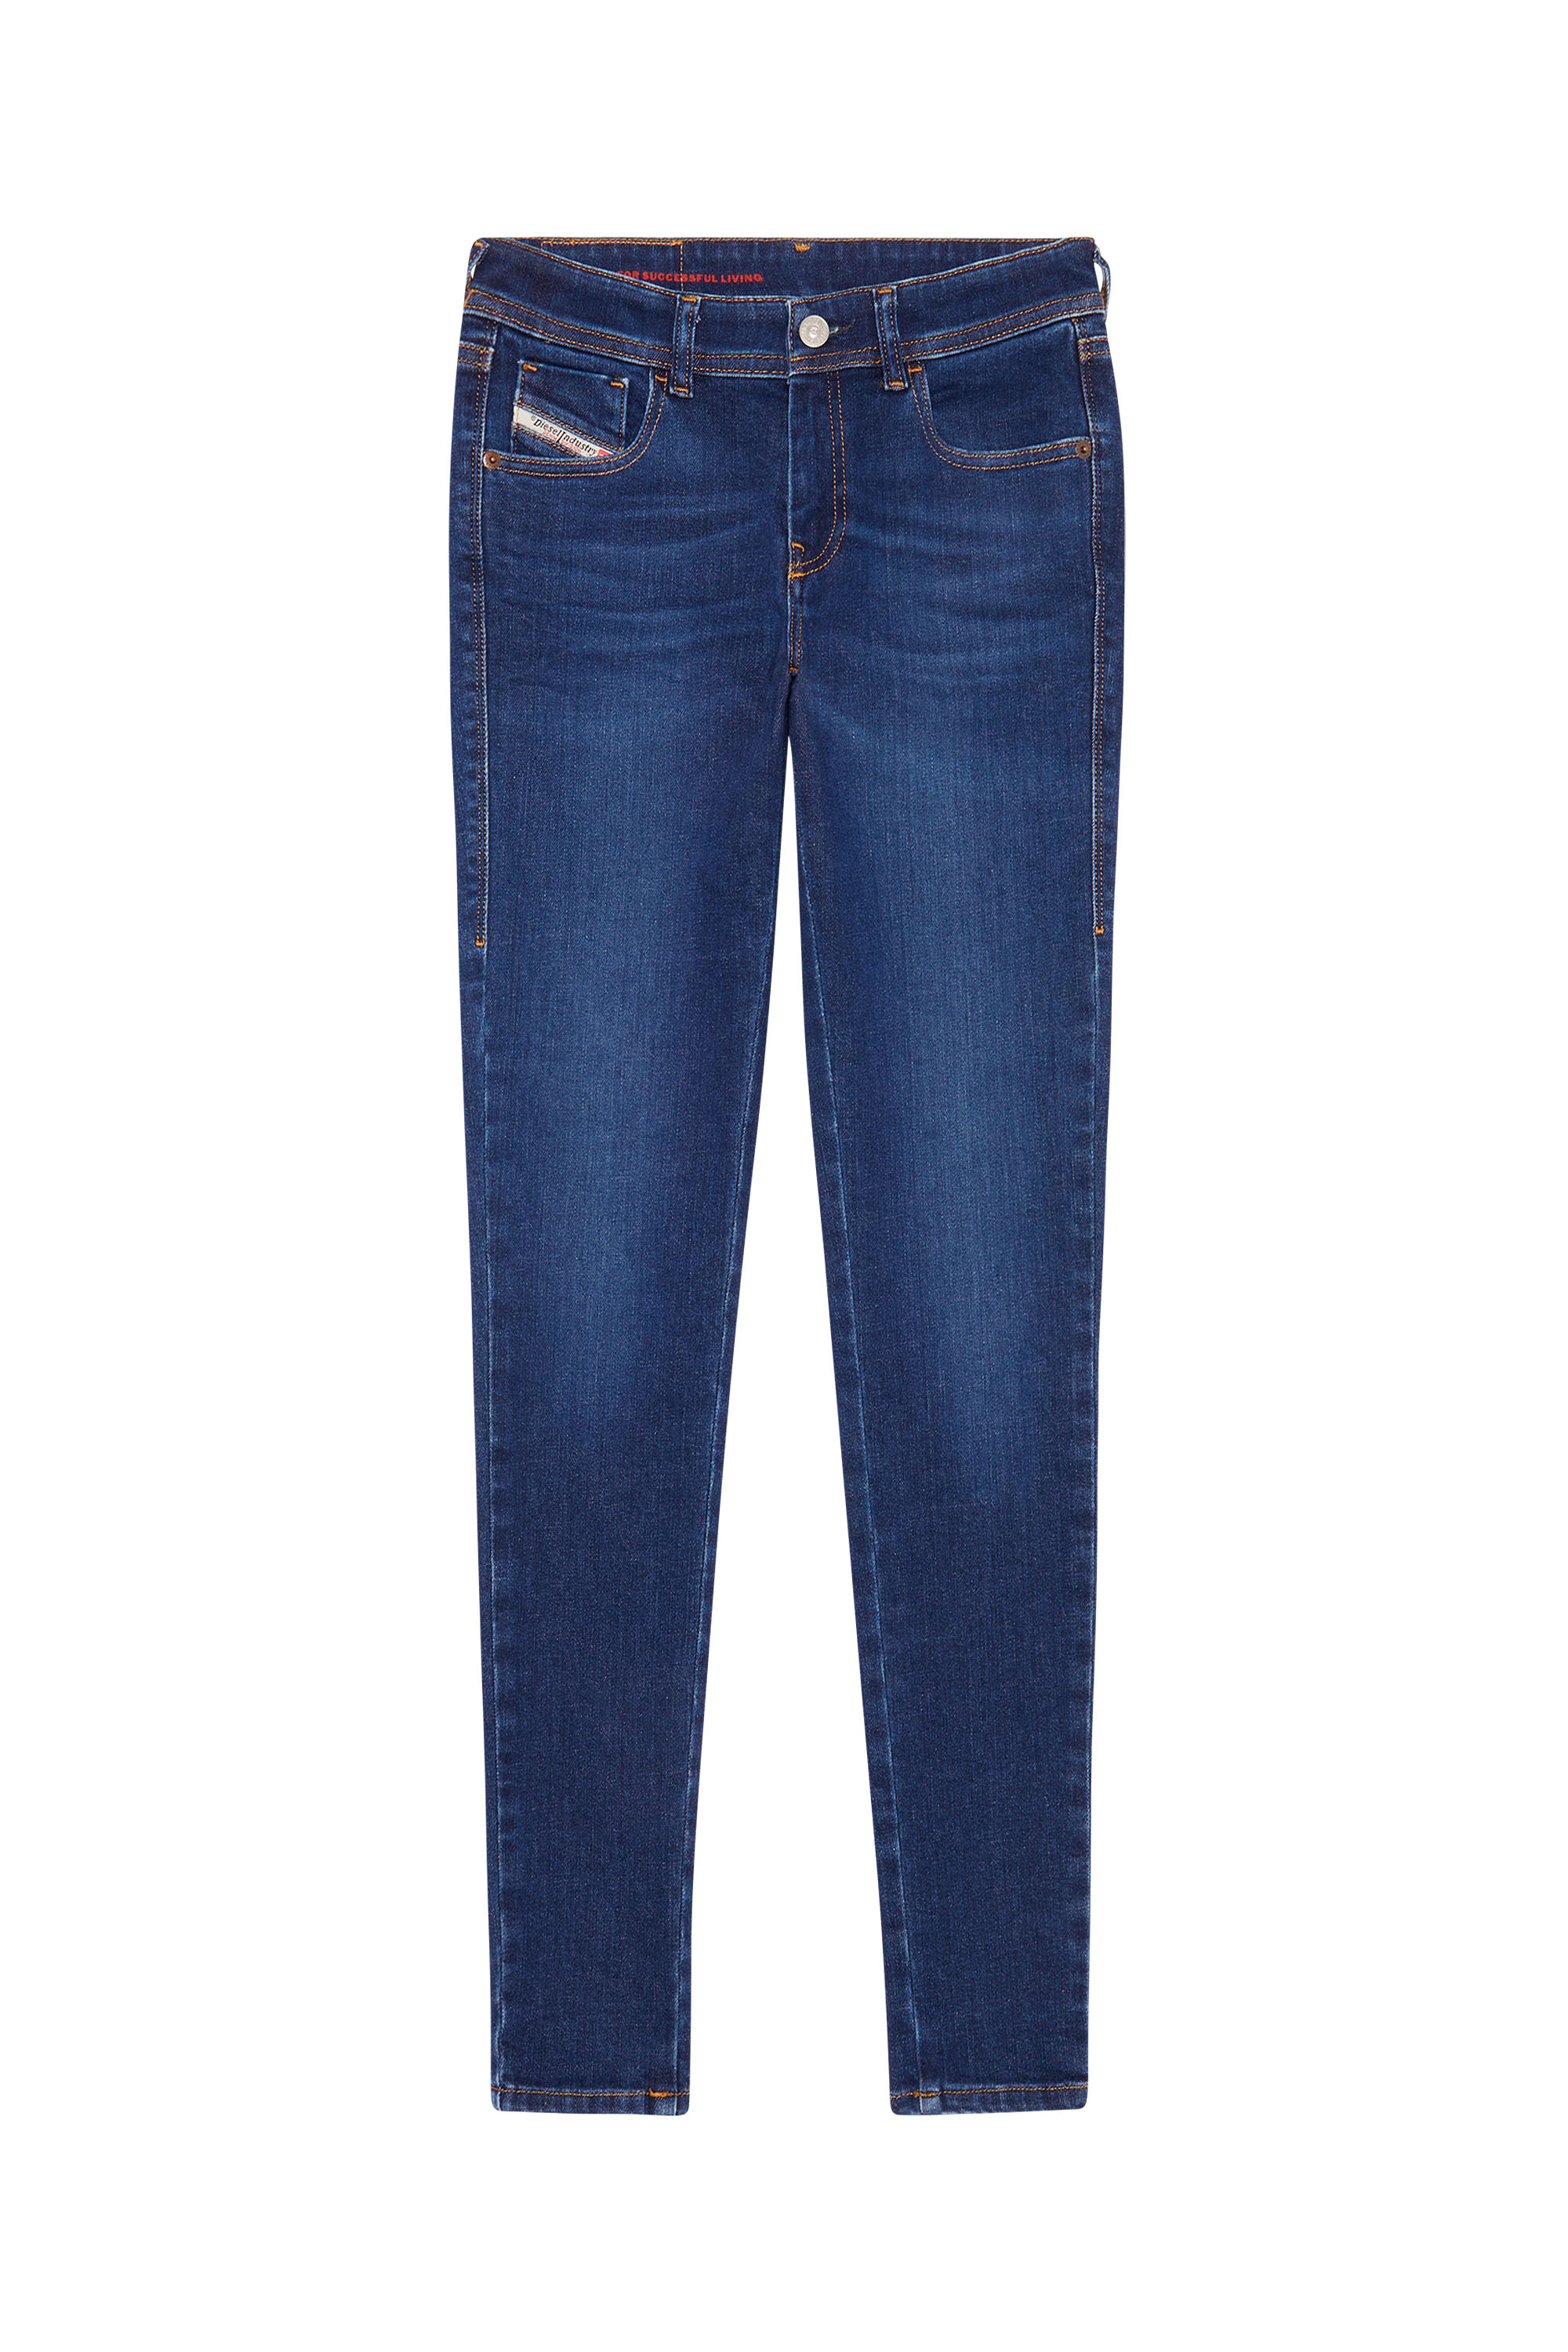 2018 Slandy low 09C19 Super skinny Jeans, Dunkelblau - Jeans